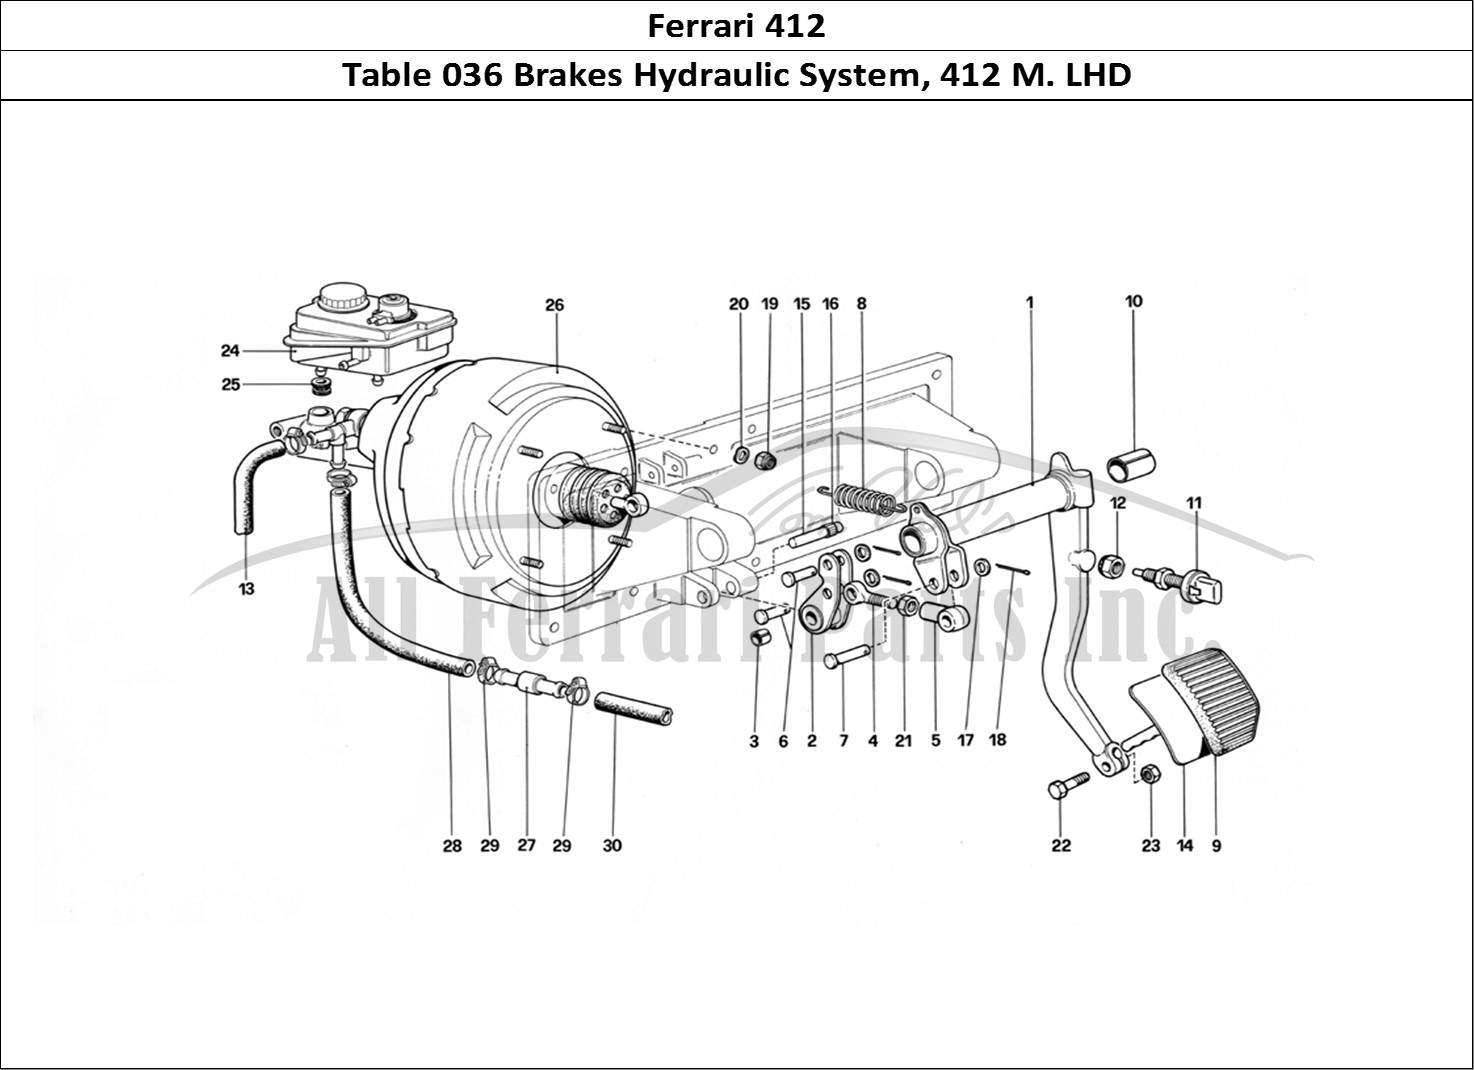 Ferrari Parts Ferrari 412 (Mechanical) Page 036 Brakes Hydraulic Control